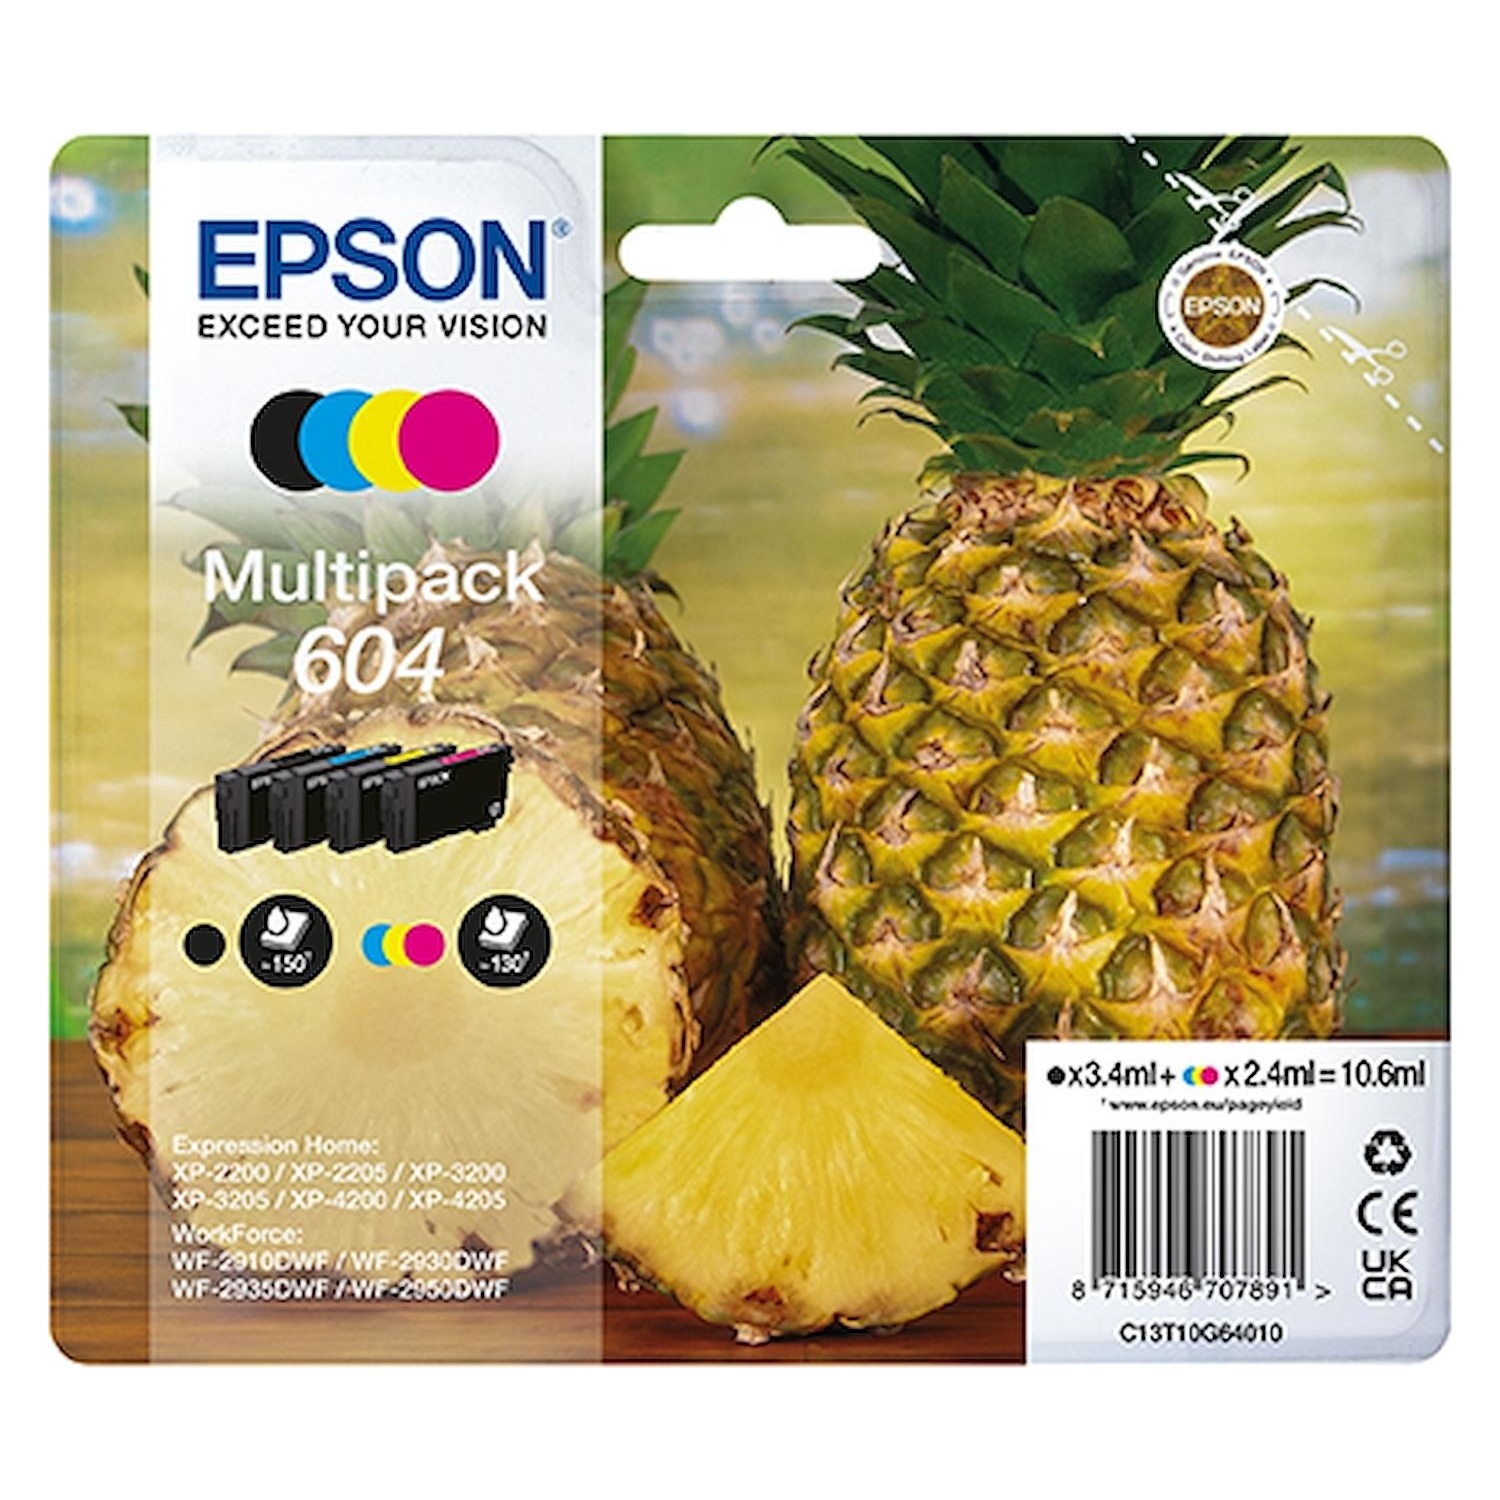 Image of Cartuccia multipack Epson serie ananas 604 4 colori